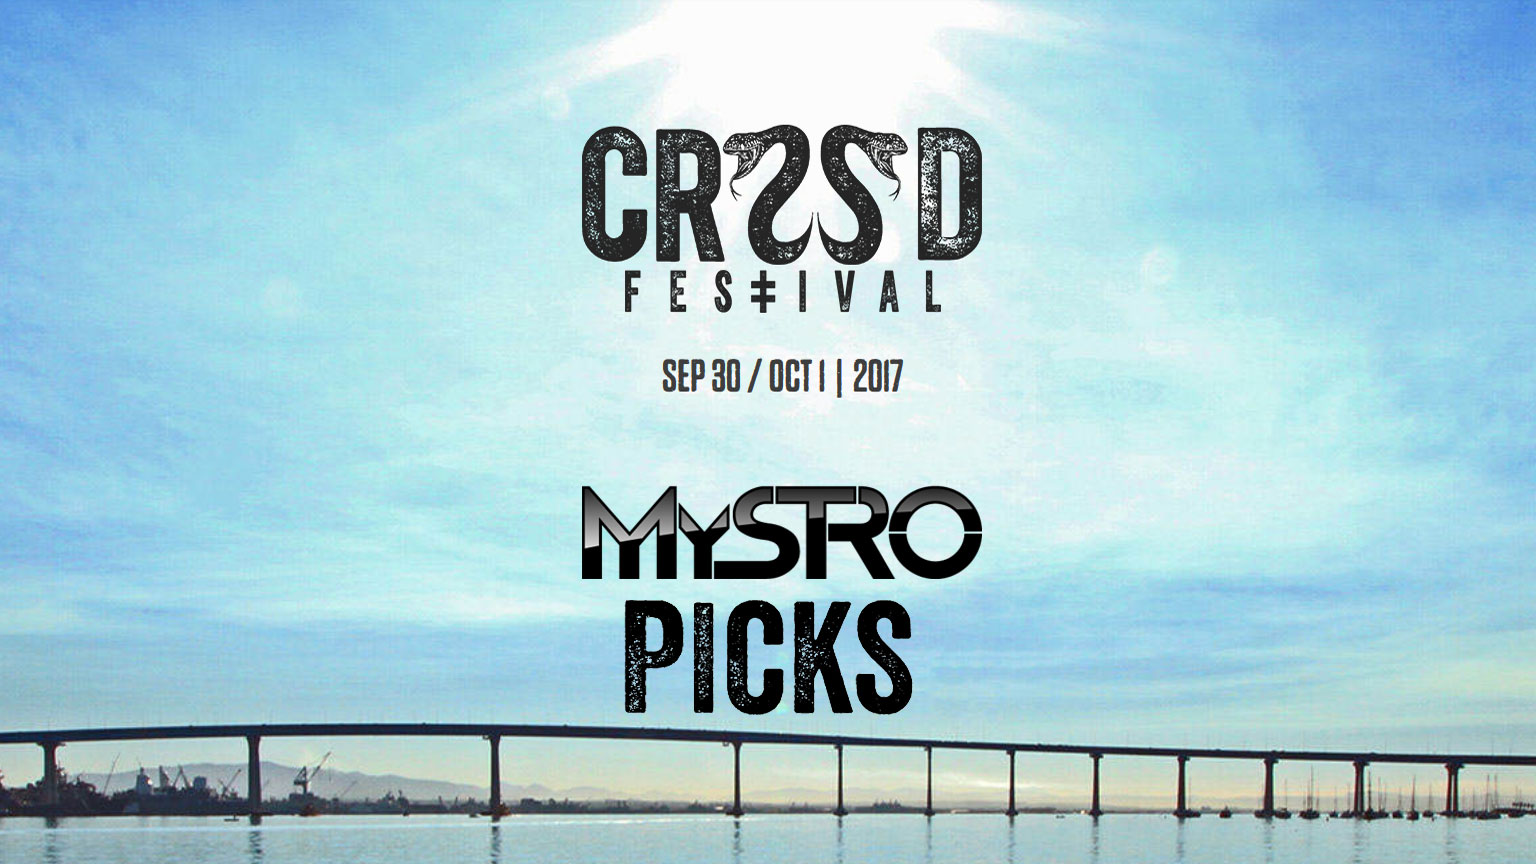 MyStro's CRSSD Festival Fall 2017 Top Picks